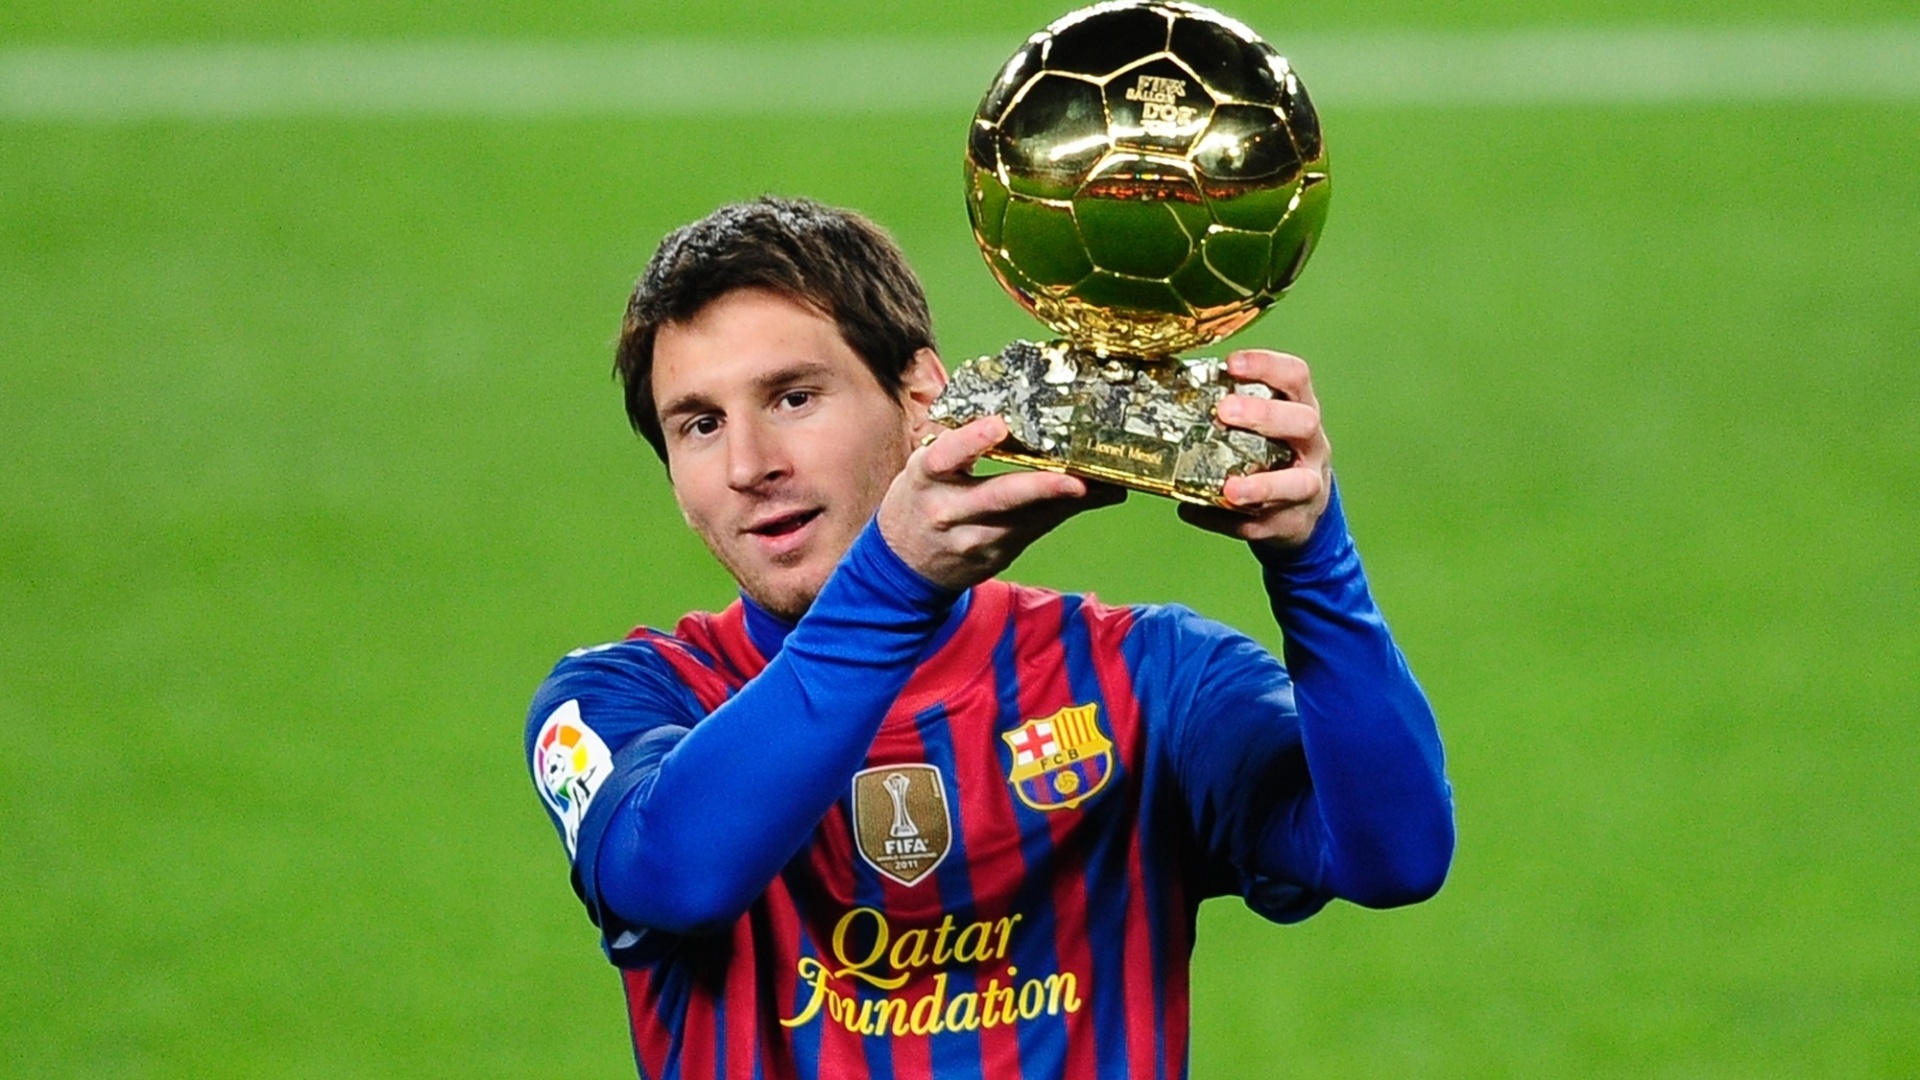 Lionel Messi cup HD, Football player background, Mobile, Desktop, 1920x1080 Full HD Desktop